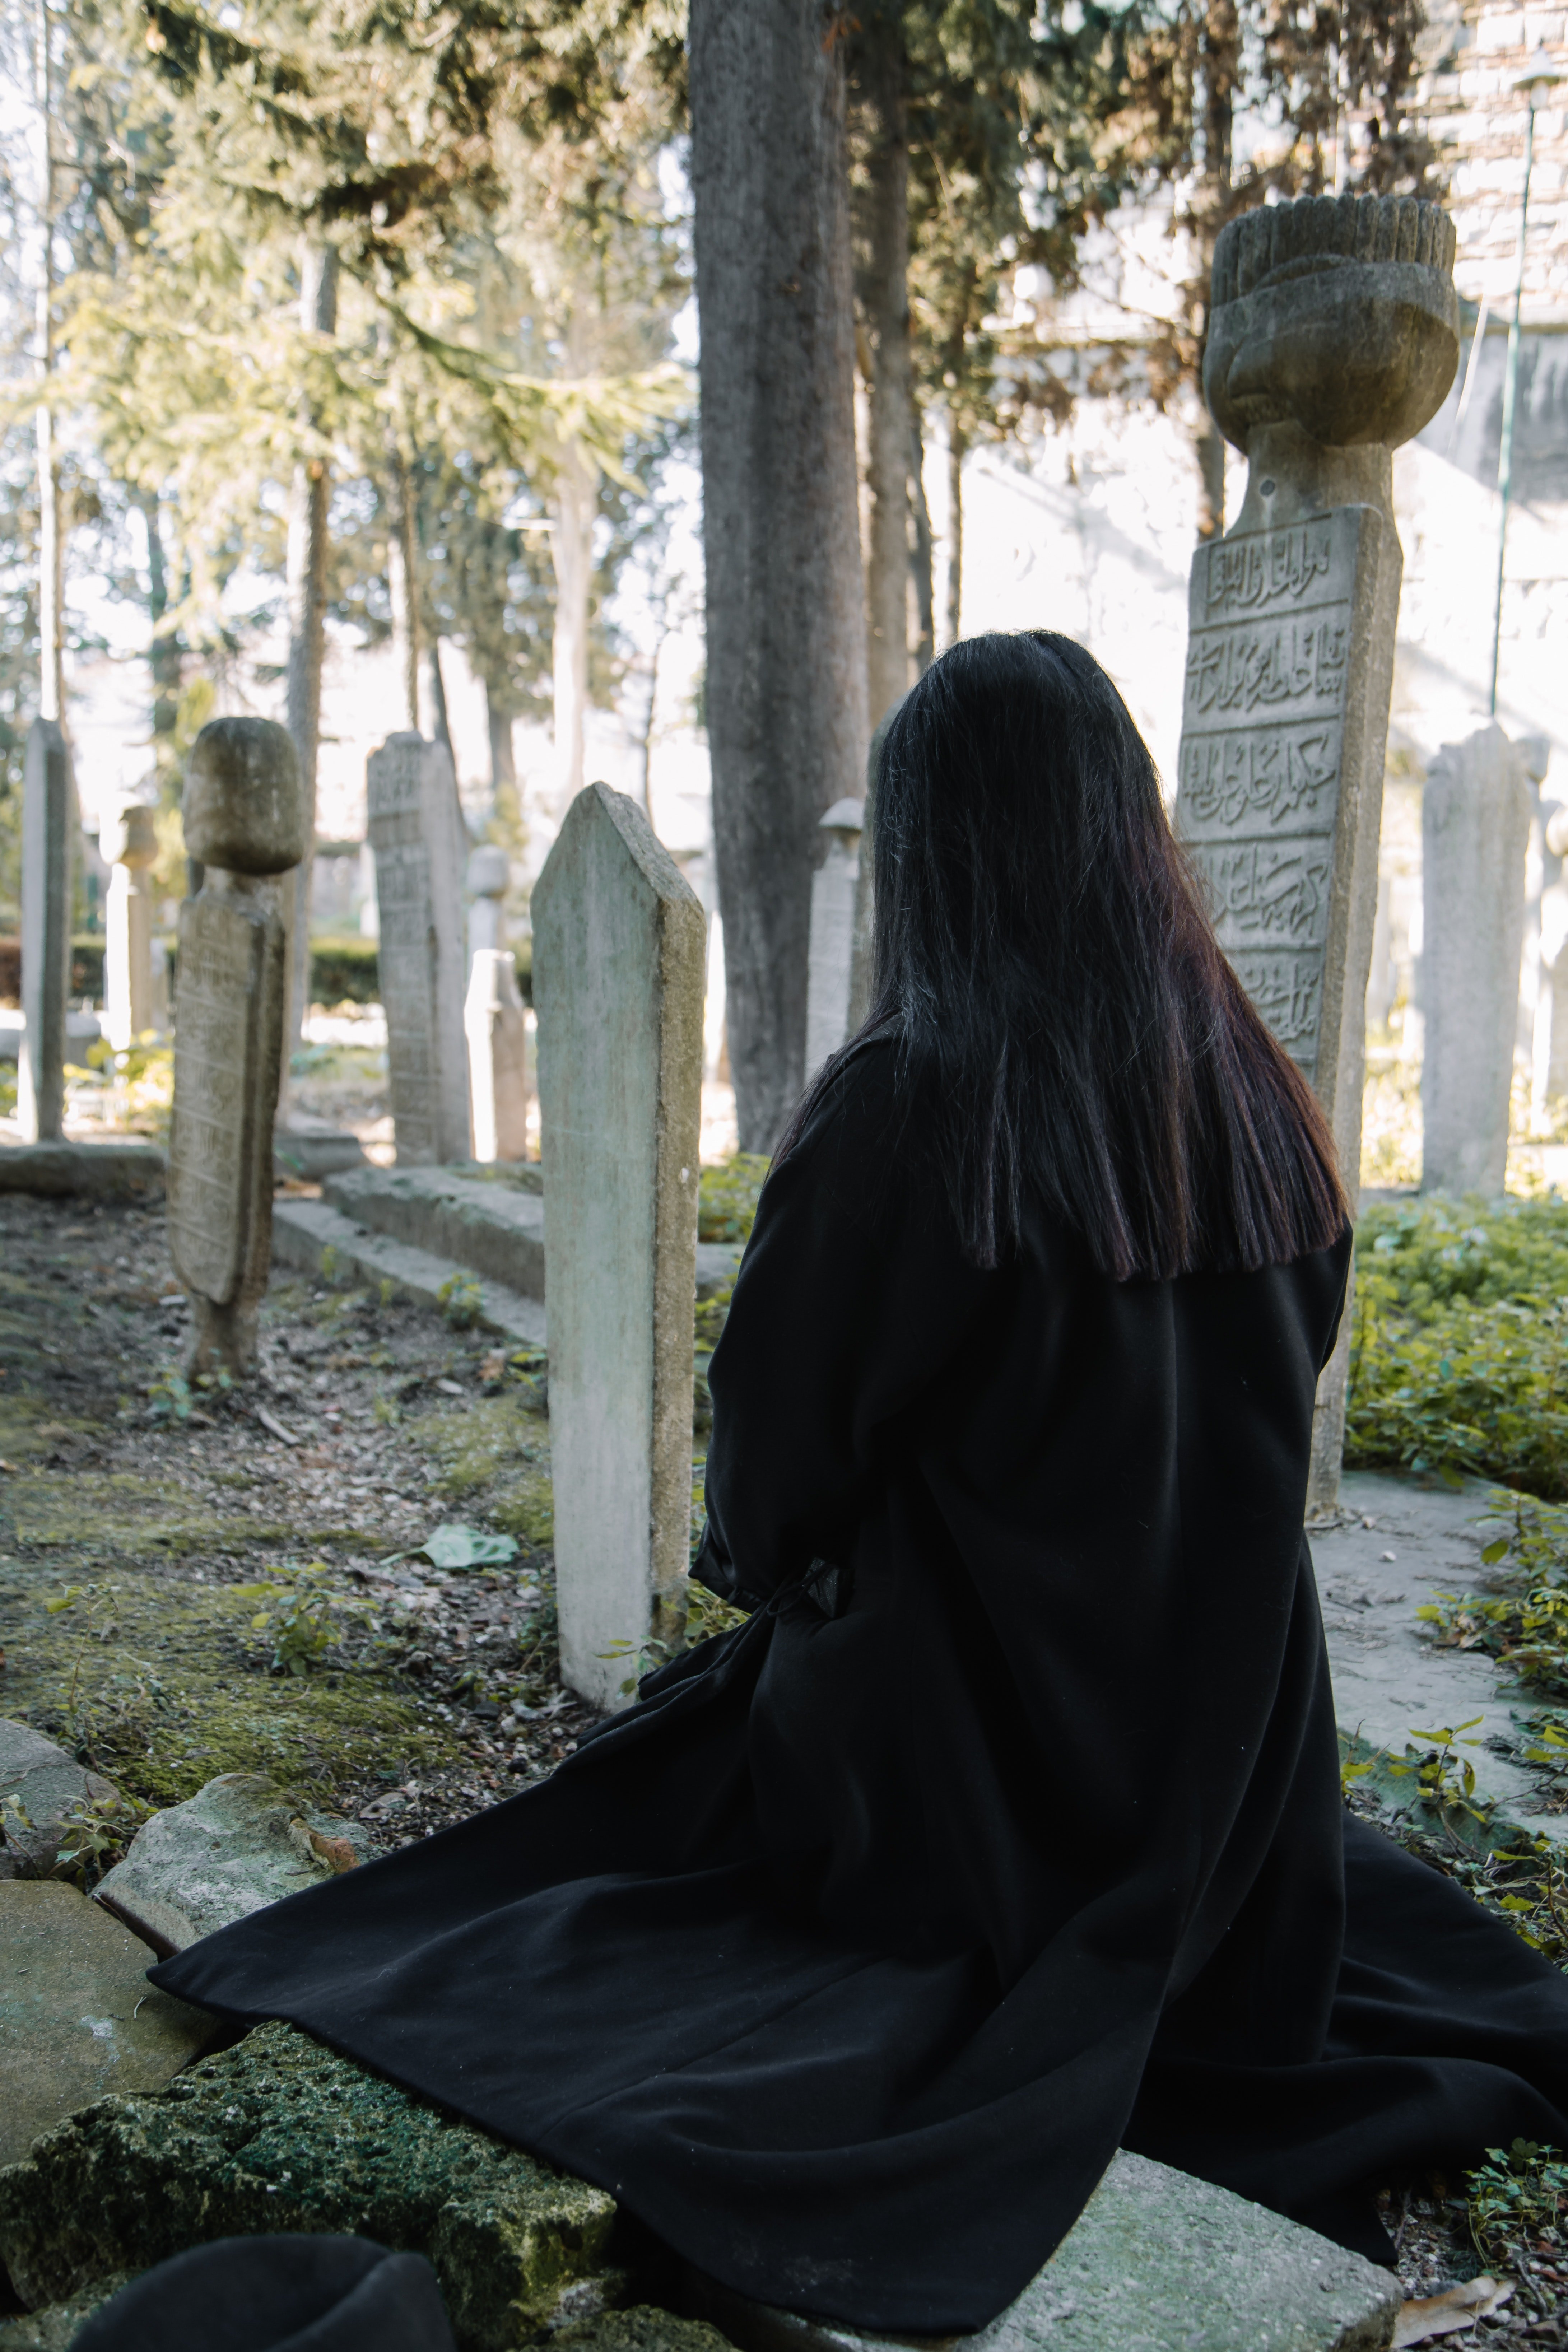 Lilli traf eine junge Frau namens Claudia am Grab ihres Sohnes | Quelle: Pexels